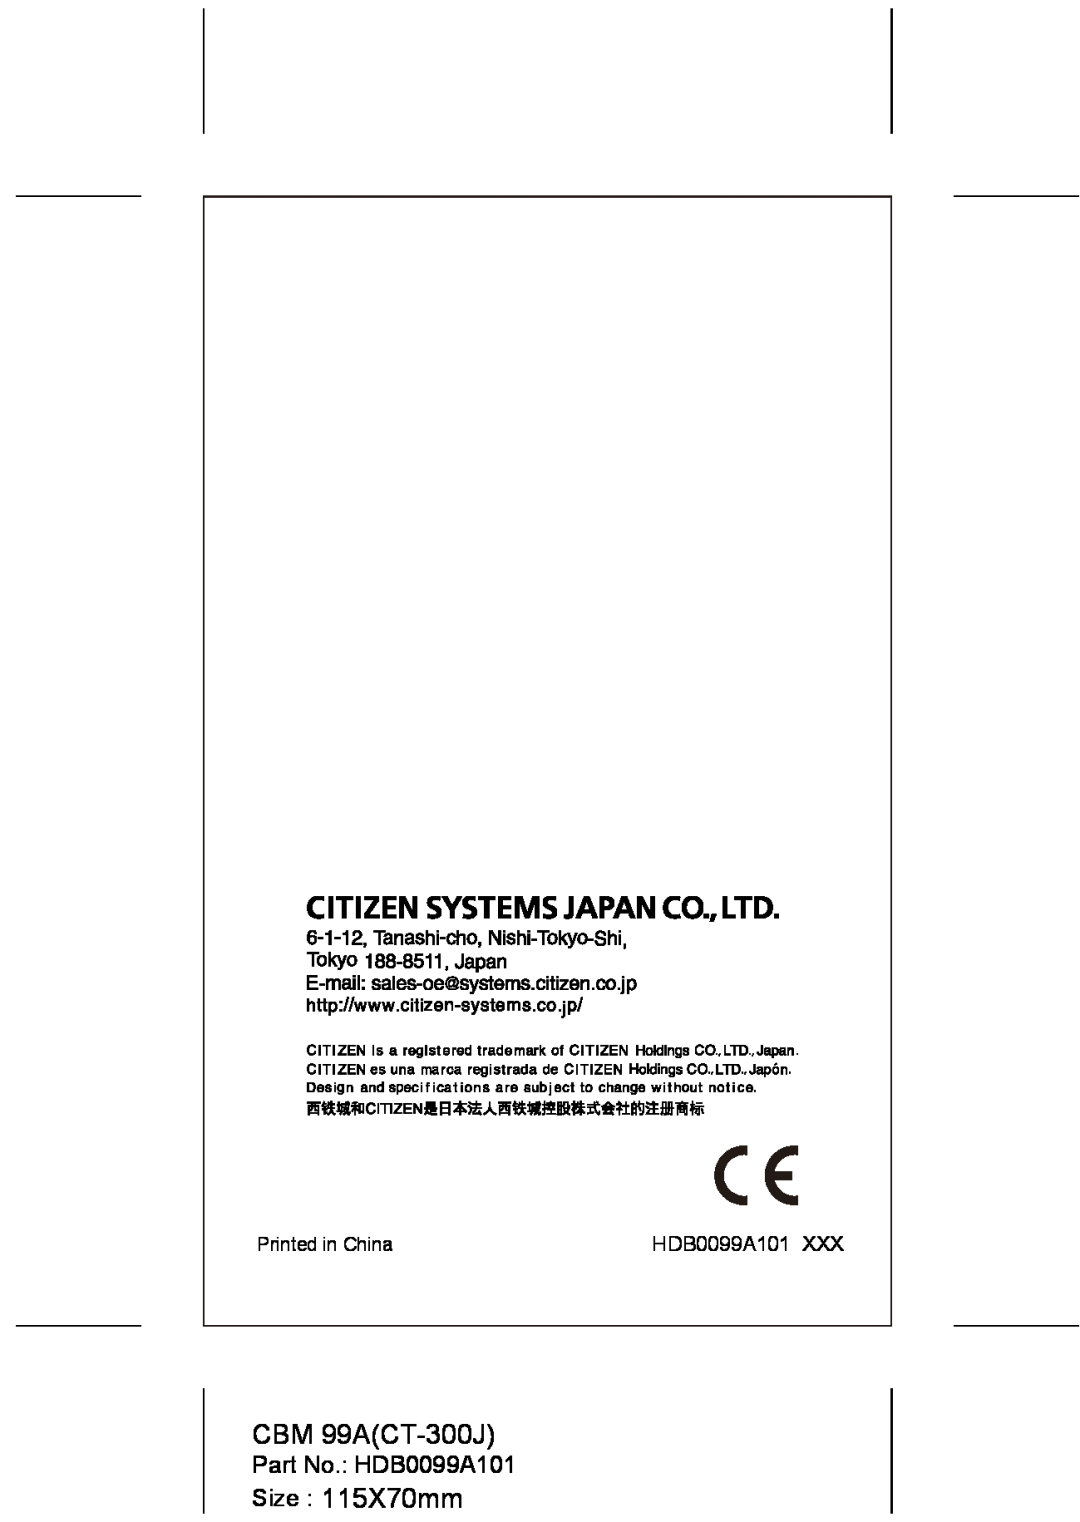 Citizen manual CBM 99ACT-300J, Size 115X70mm, Part No. HDB0099A101 